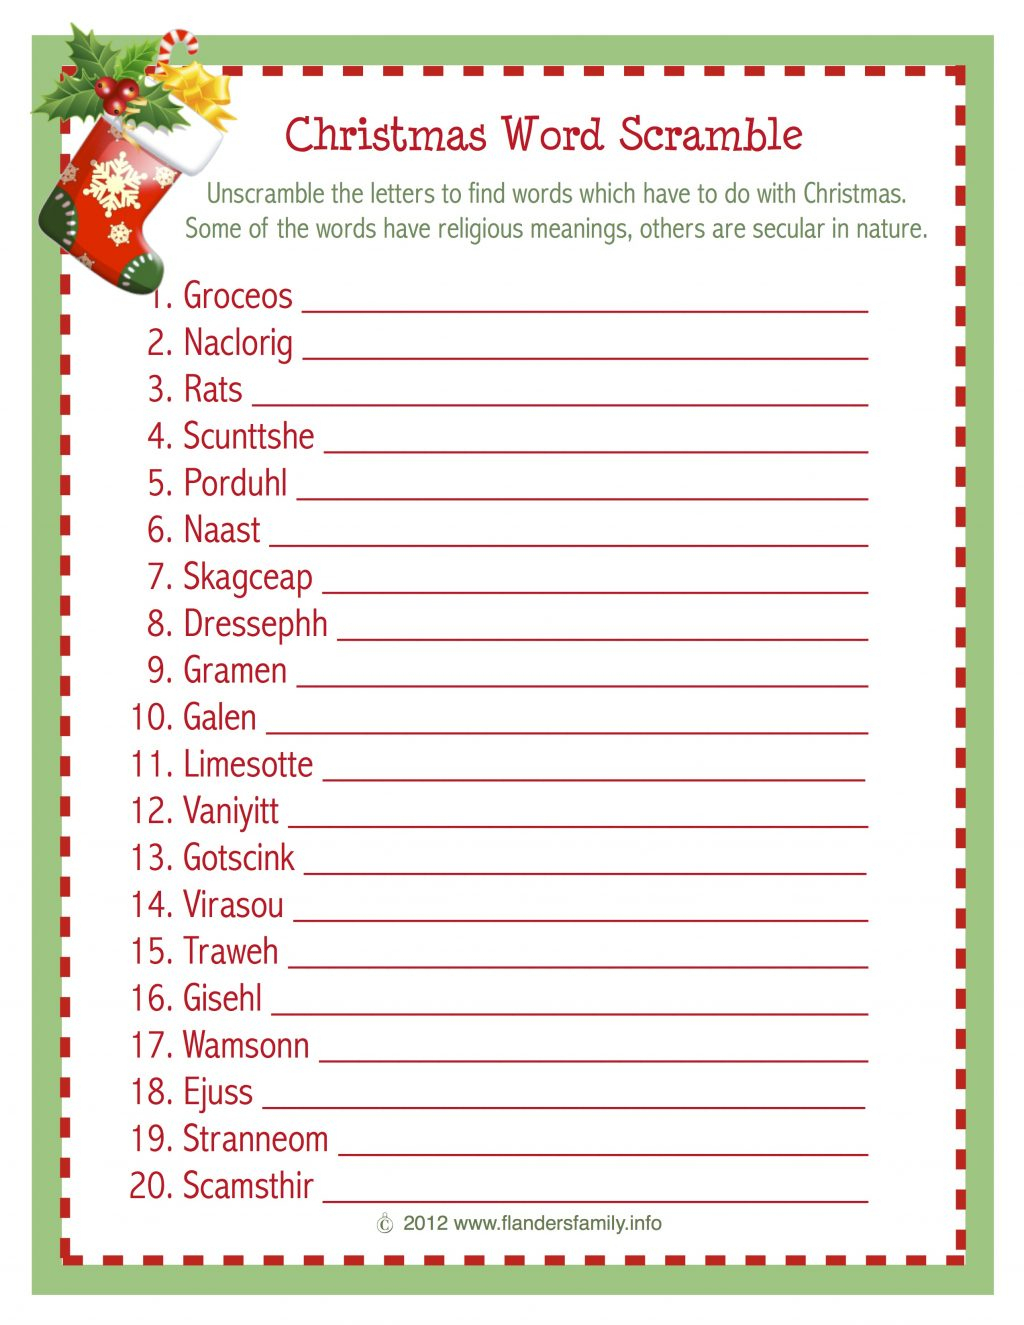 Christmas Word Scramble (Free Printable) - Flanders Family Homelife - Free Printable Jumble Word Games